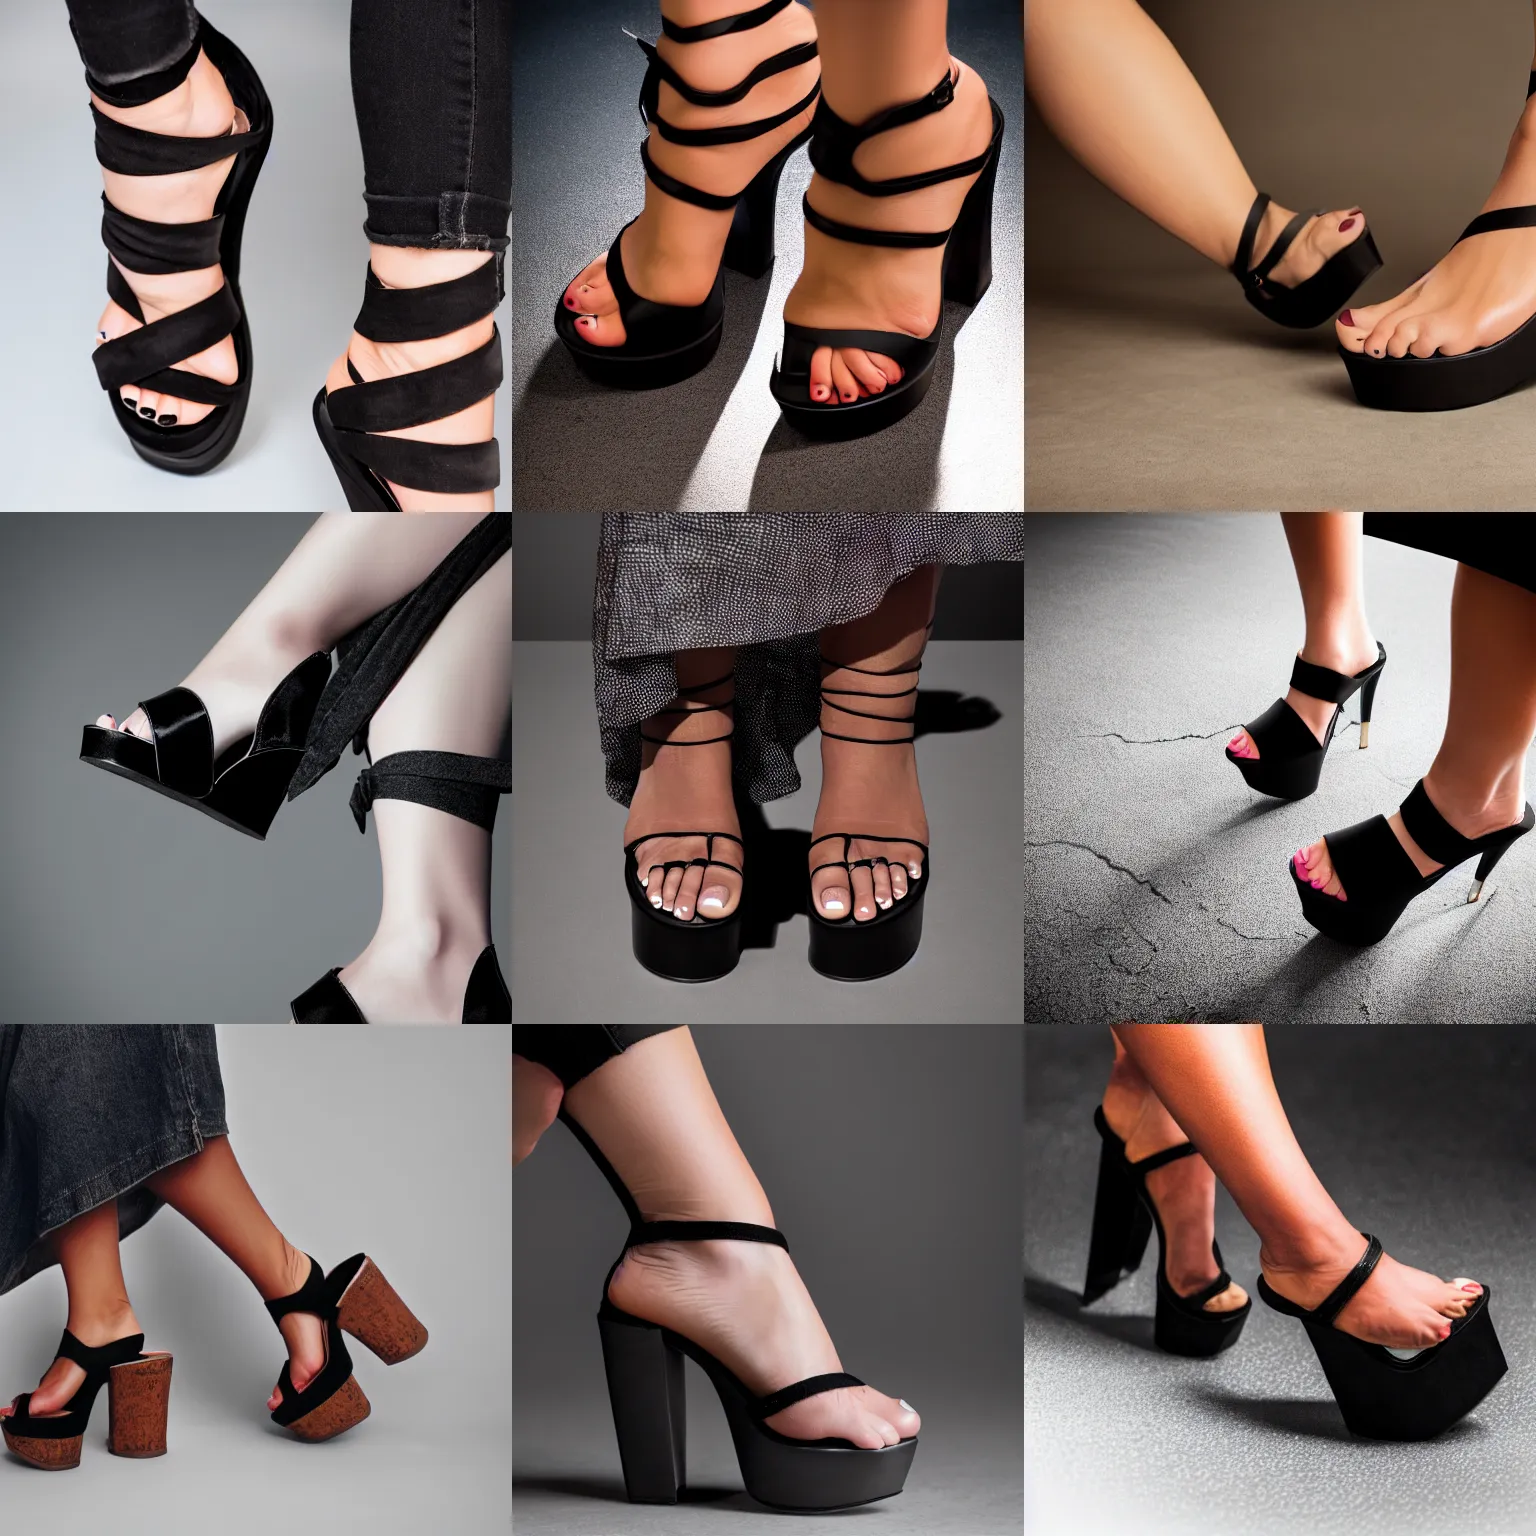 Prompt: a close up shot of a woman's feet in black demonia chunky platform sandals, studio light, 8 k